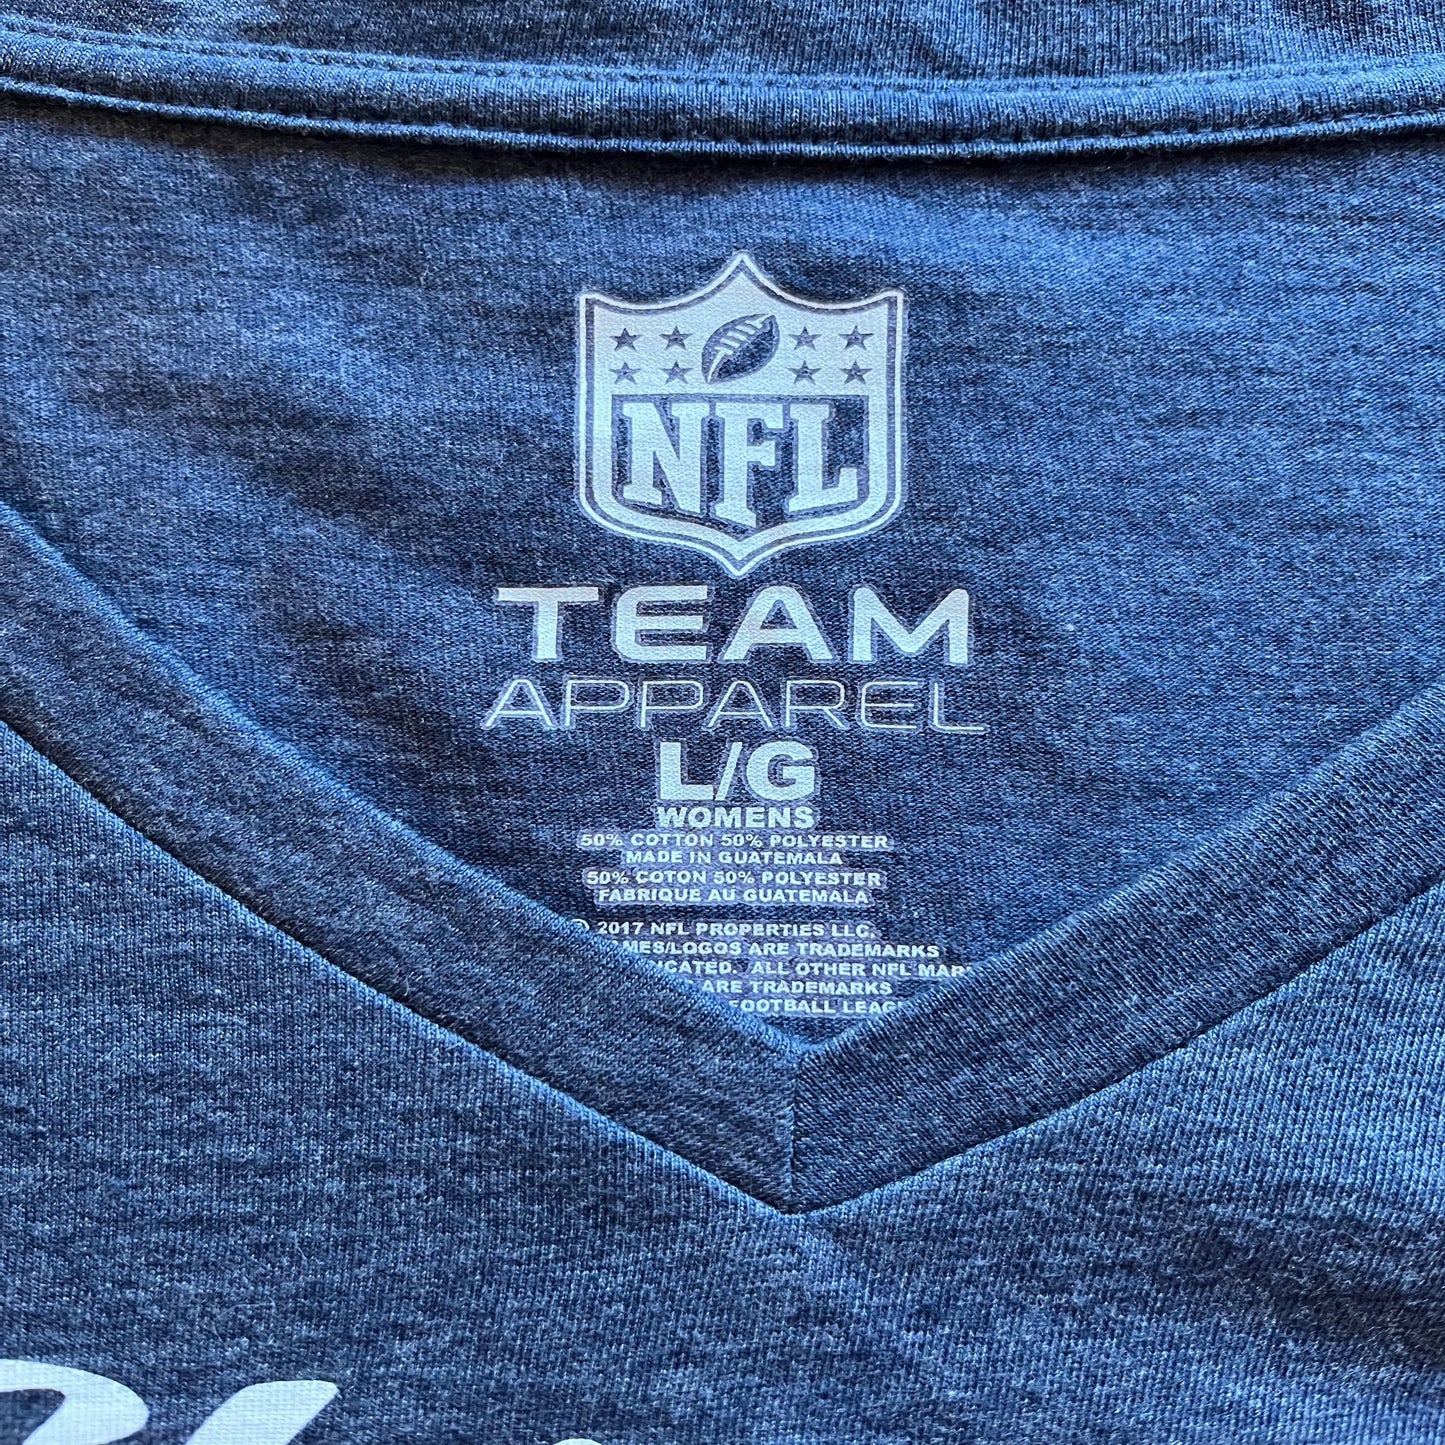 Chicago Bears - NFL - NFL Team Apparel Tee (Large)